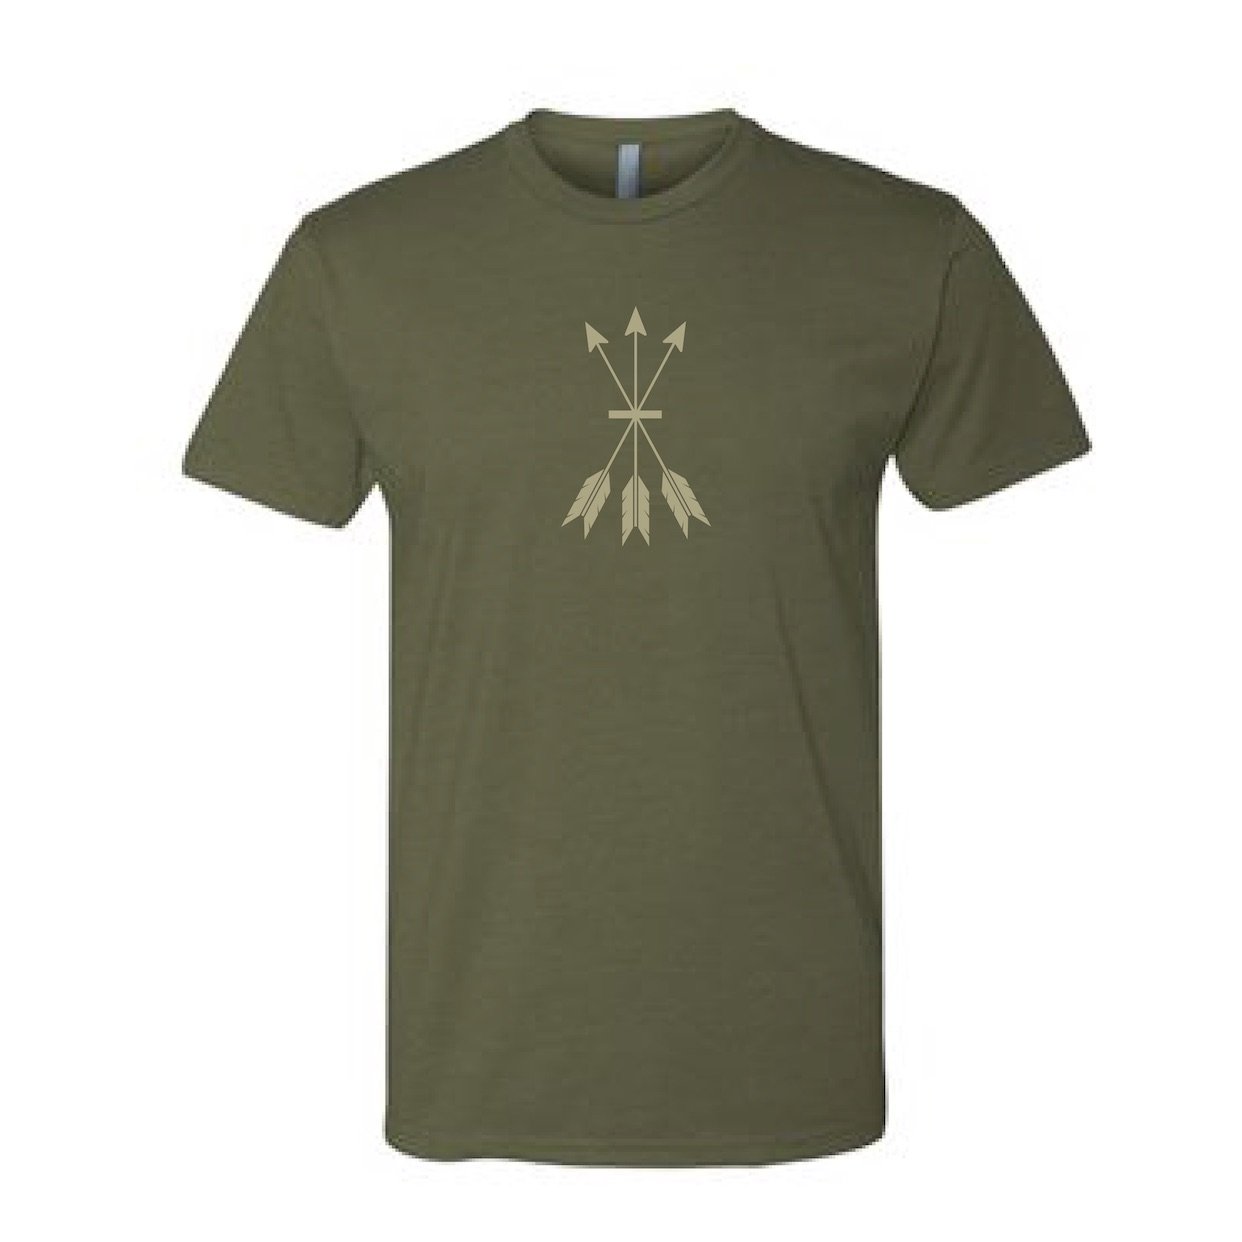 3 Arrow T-shirt - Military Green w/tan